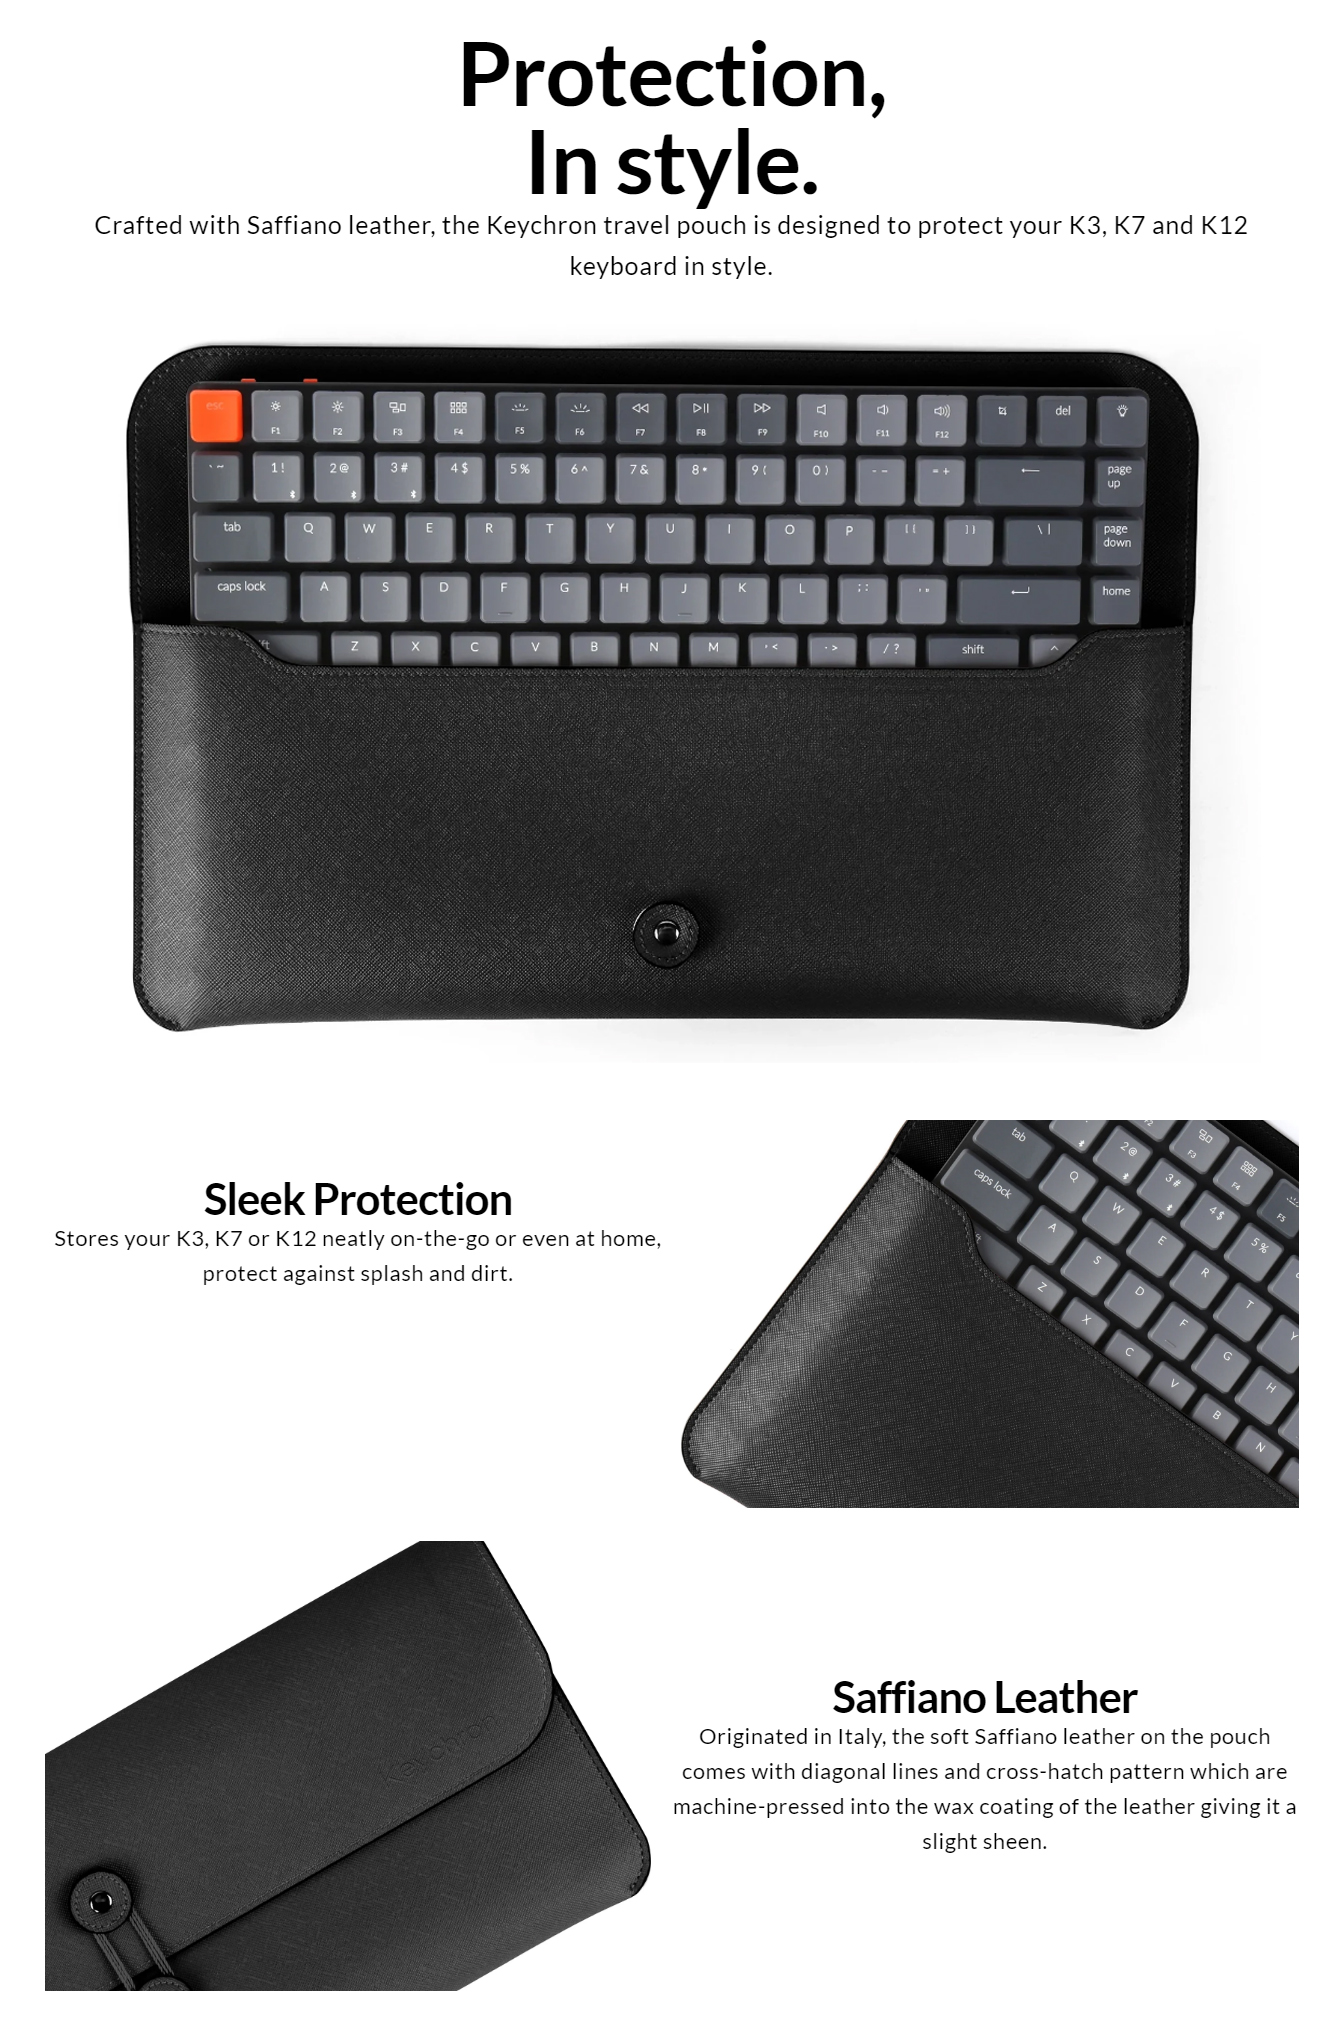 Keyboard-Accessories-Keychron-TP3-O-Travel-Pouch-Keyboard-Carrying-Case-Bag-for-K3-K7-K12-Orange-1